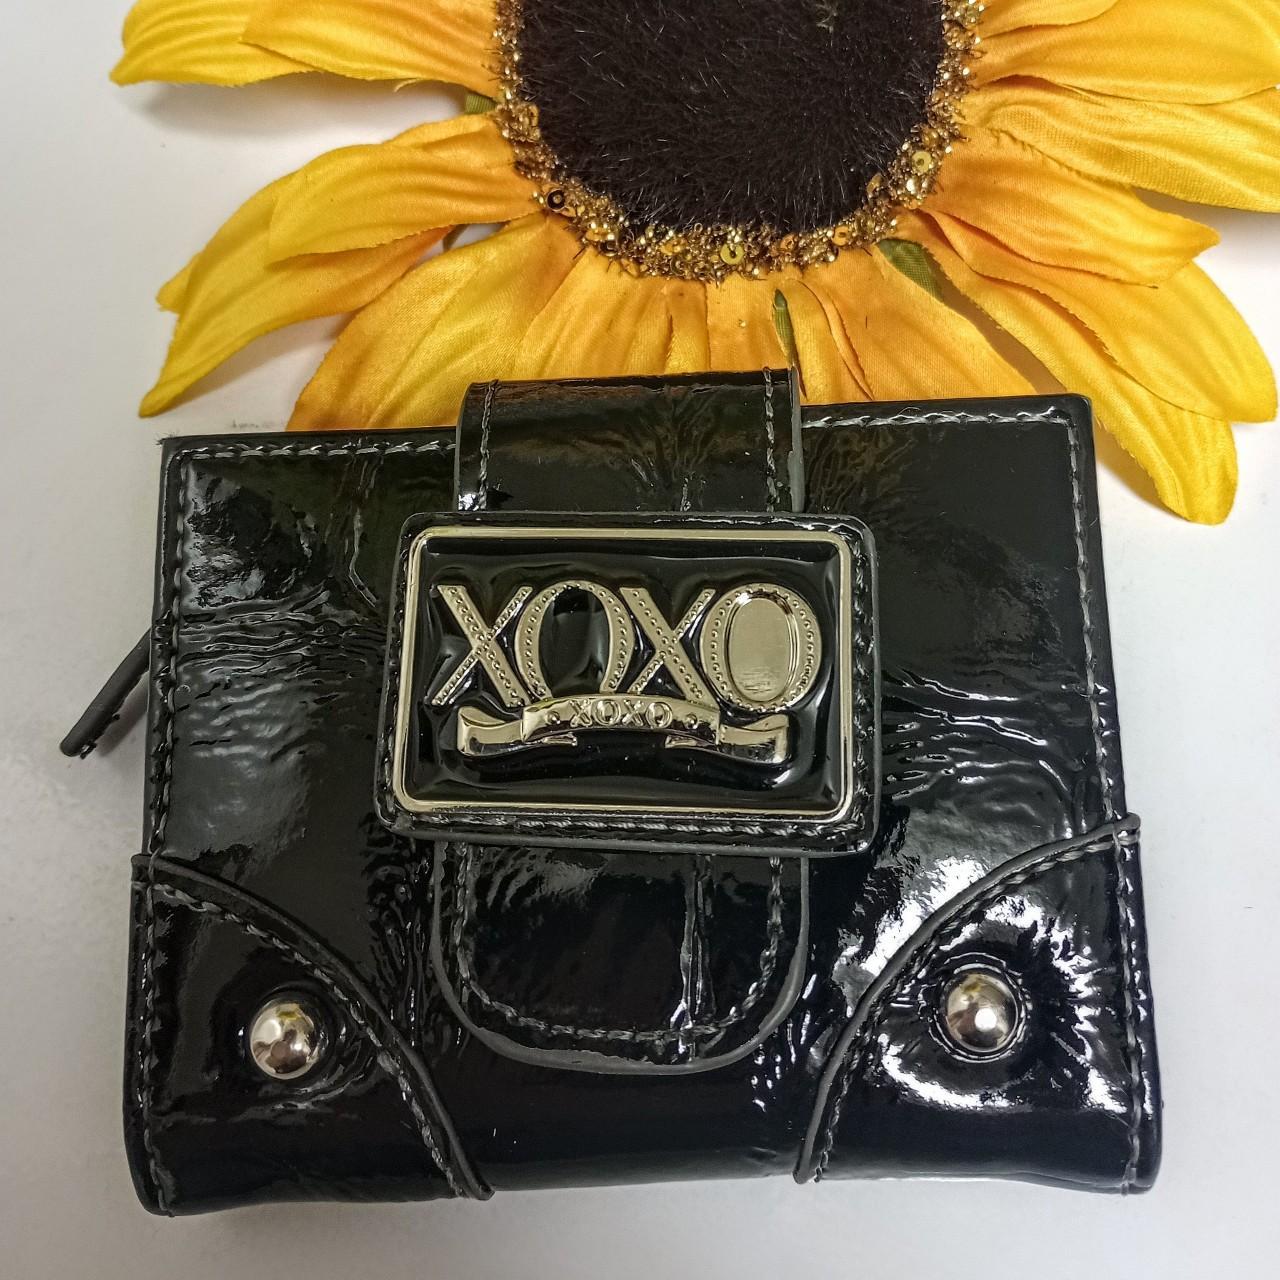 XOXO Medium Black Urban Heart Cross Body Handbag with Purse for Women -  Walmart.com